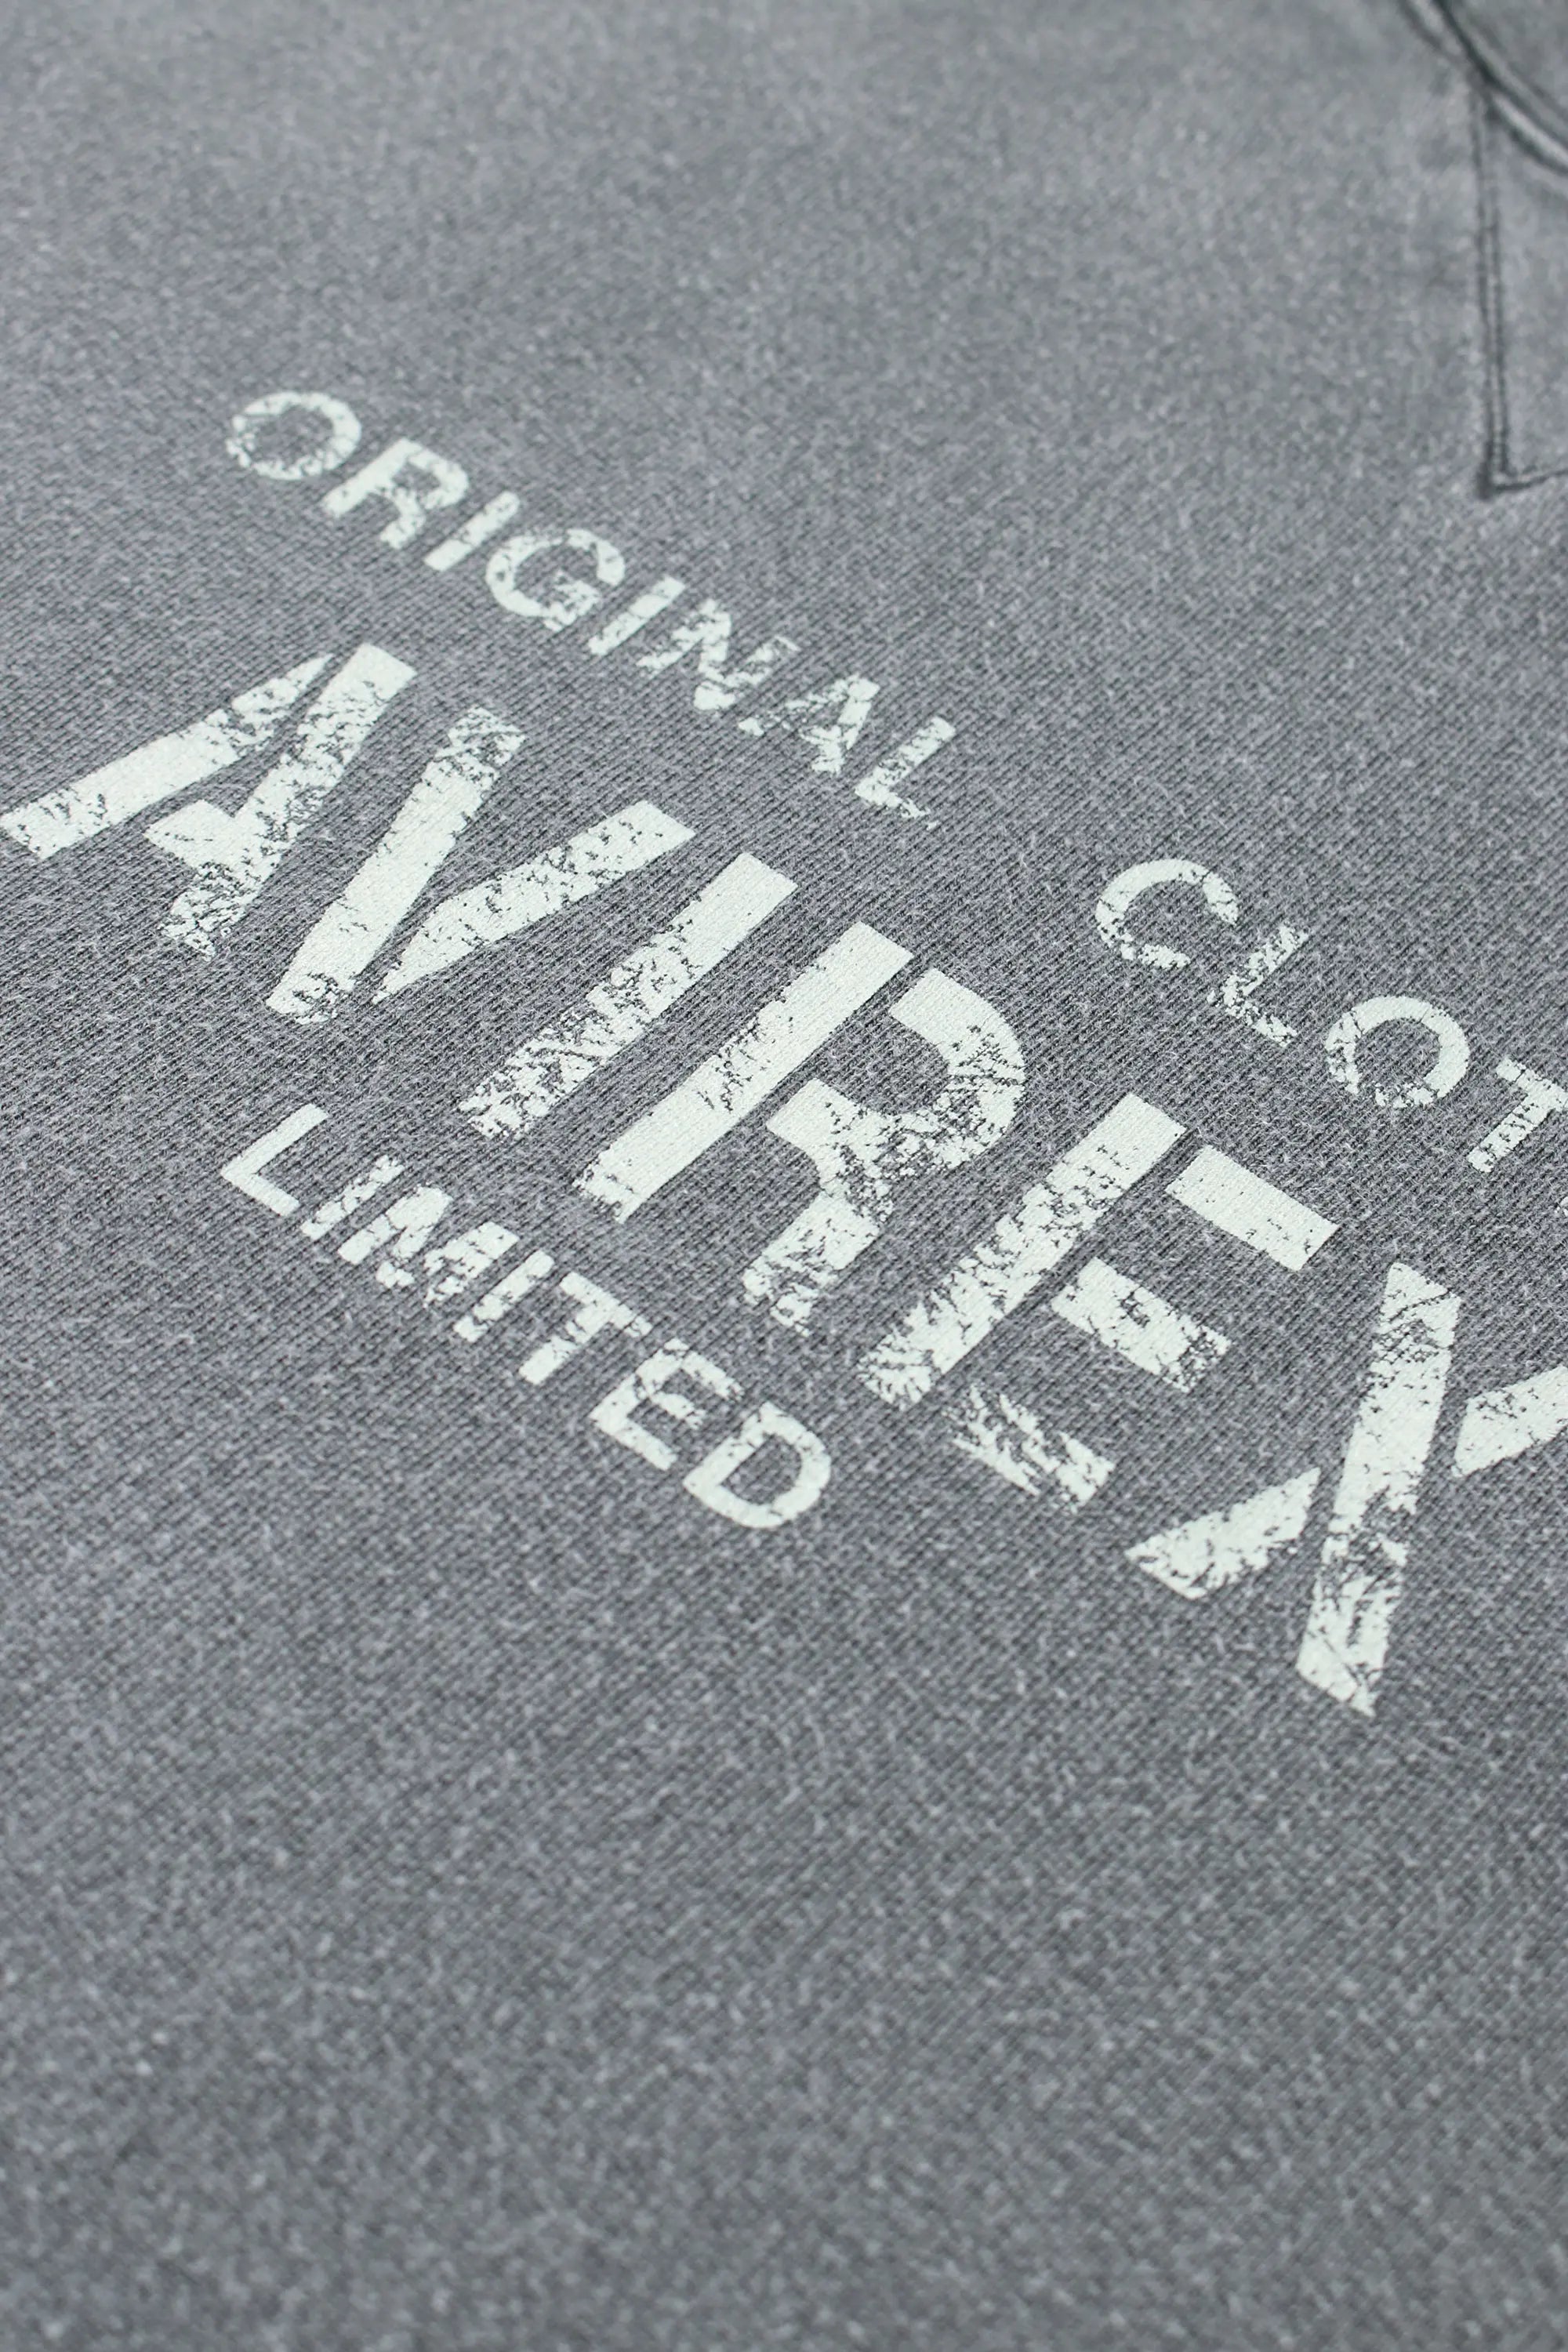 Avirex Vintage Logo Sweater